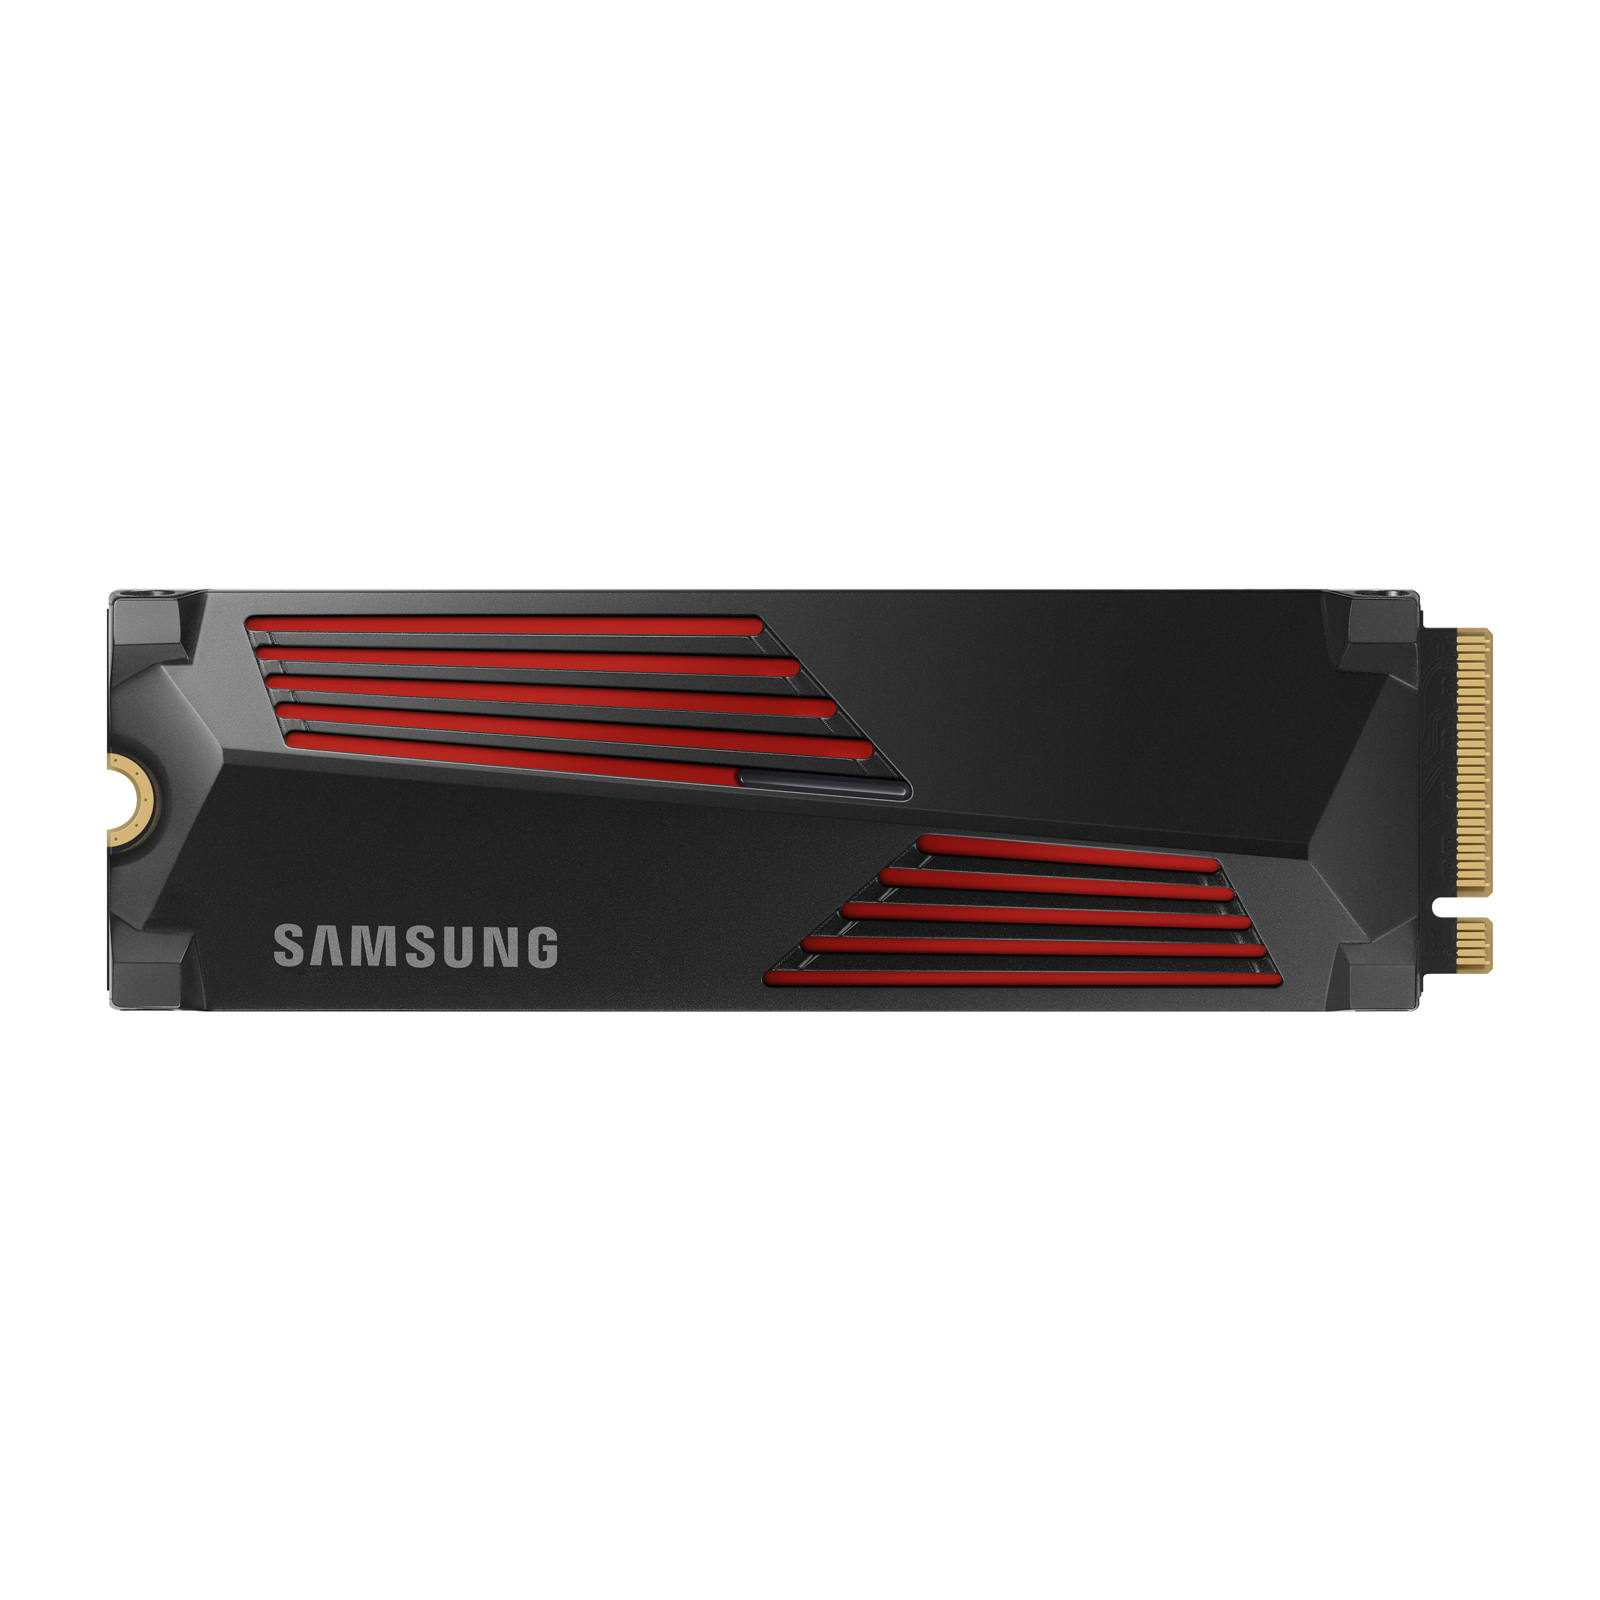 Samsung NVMe M.2 SSD 990 PRO with Heatsink (1TB) | ITG